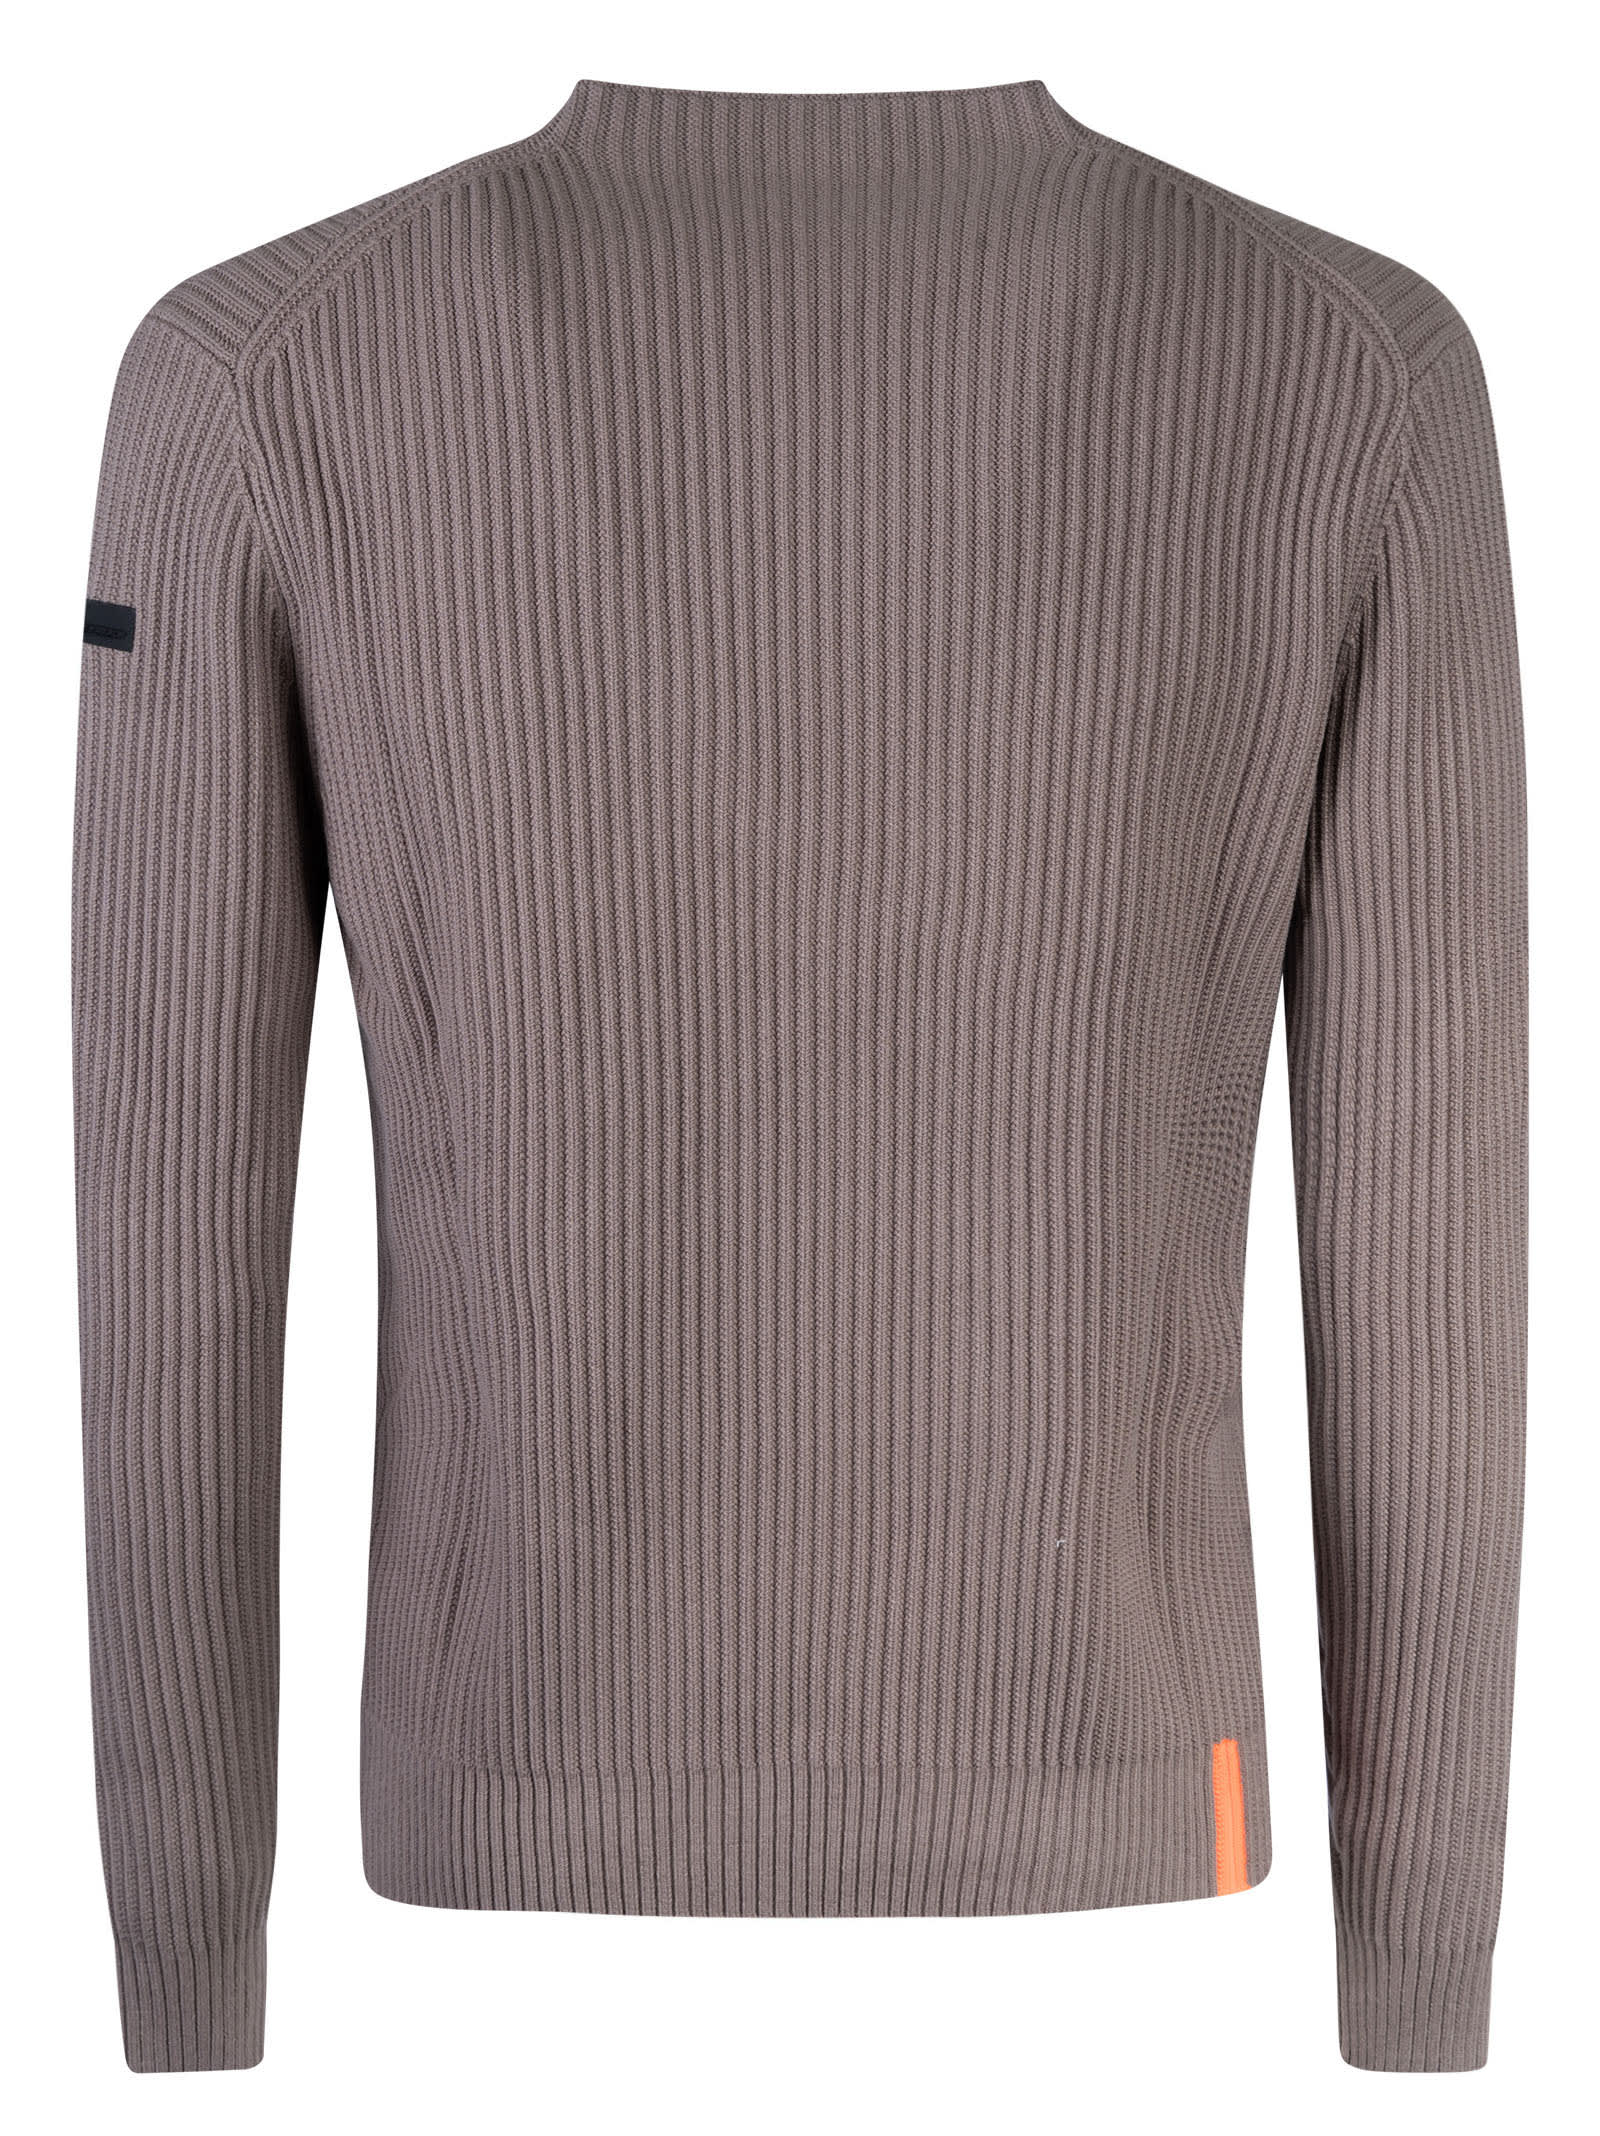 Shop Rrd - Roberto Ricci Design Seal Knit Sweatshirt